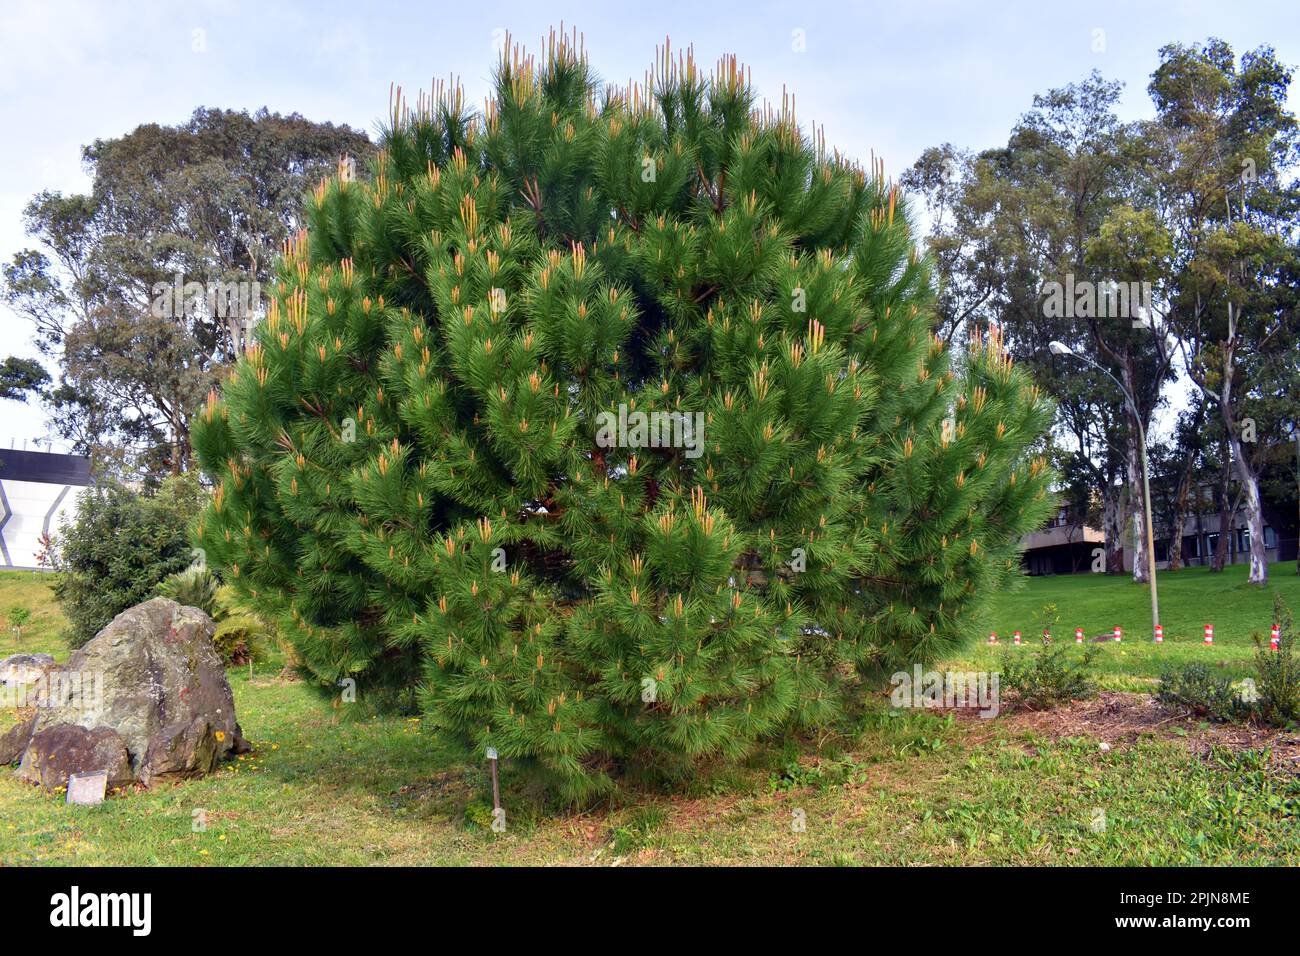 The stone pine (Pinus pinea) in a garden or park Stock Photo